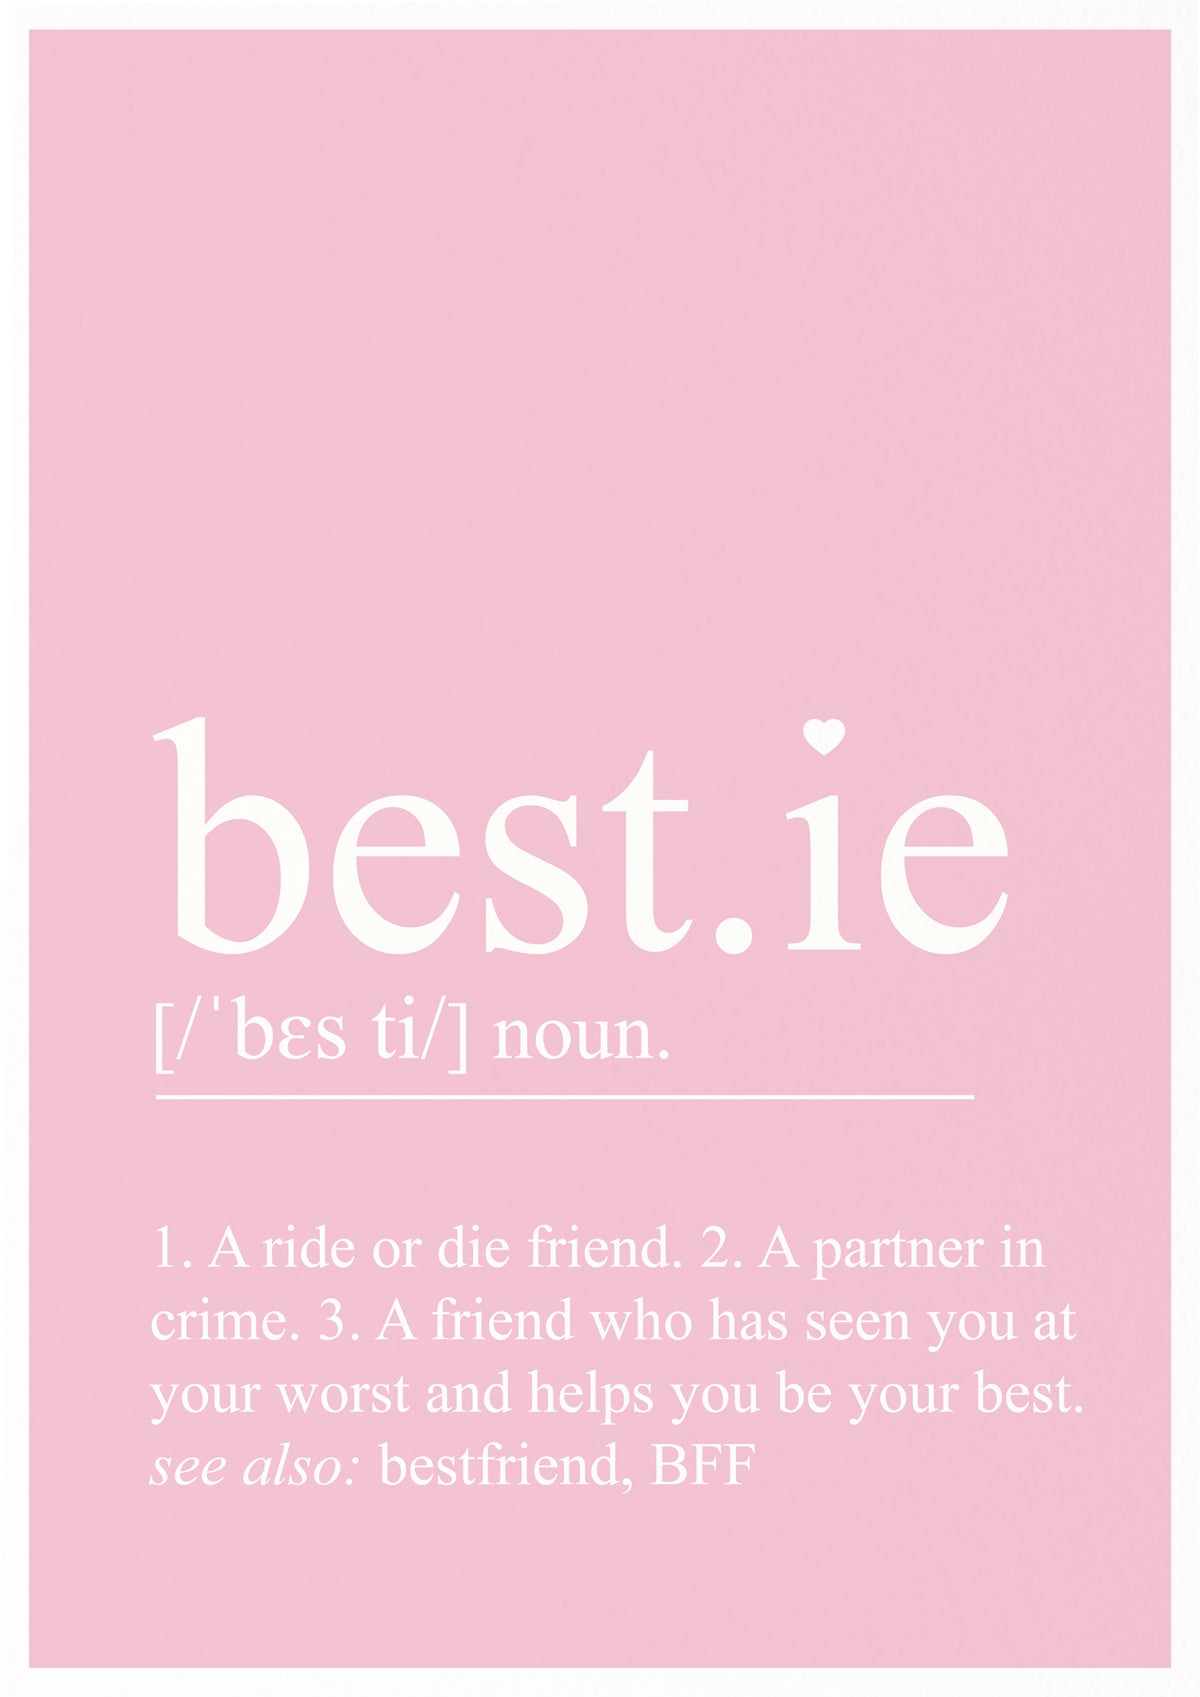 Bestie definition, Best friend definition, Bestie meaning